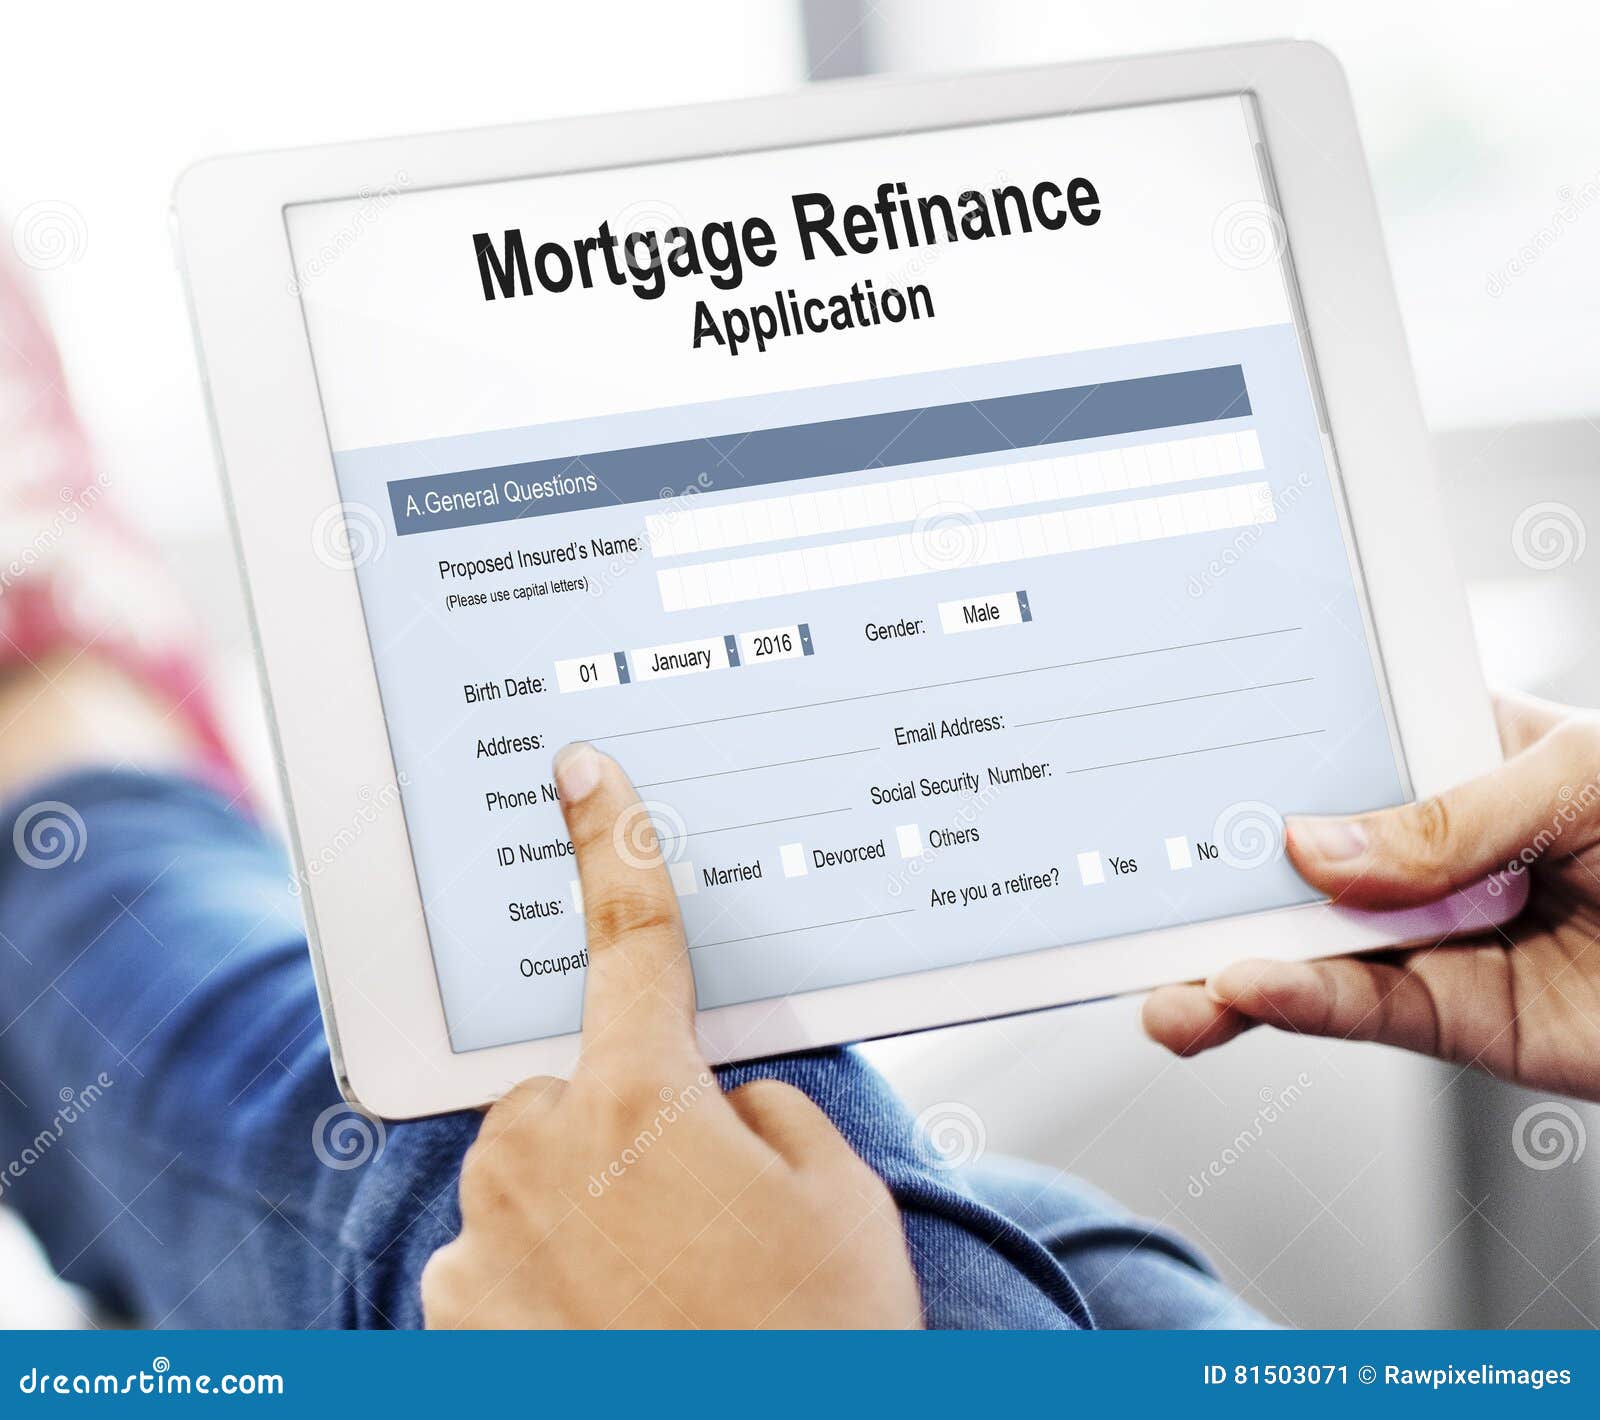 mortgage refinance application form concept